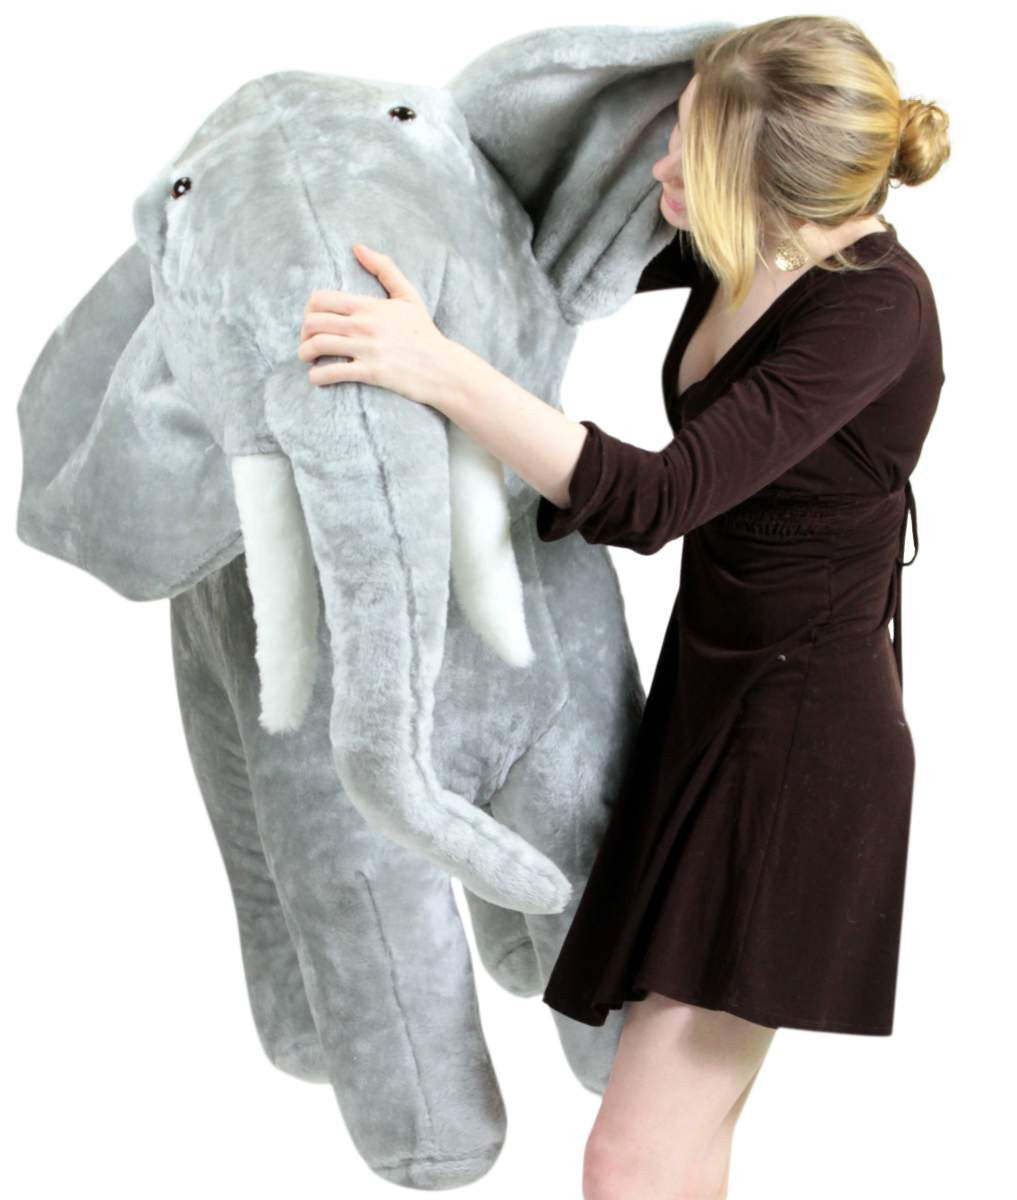 American Made Giant Stuffed Elephant 48 Inch Soft Big Plush Realistic